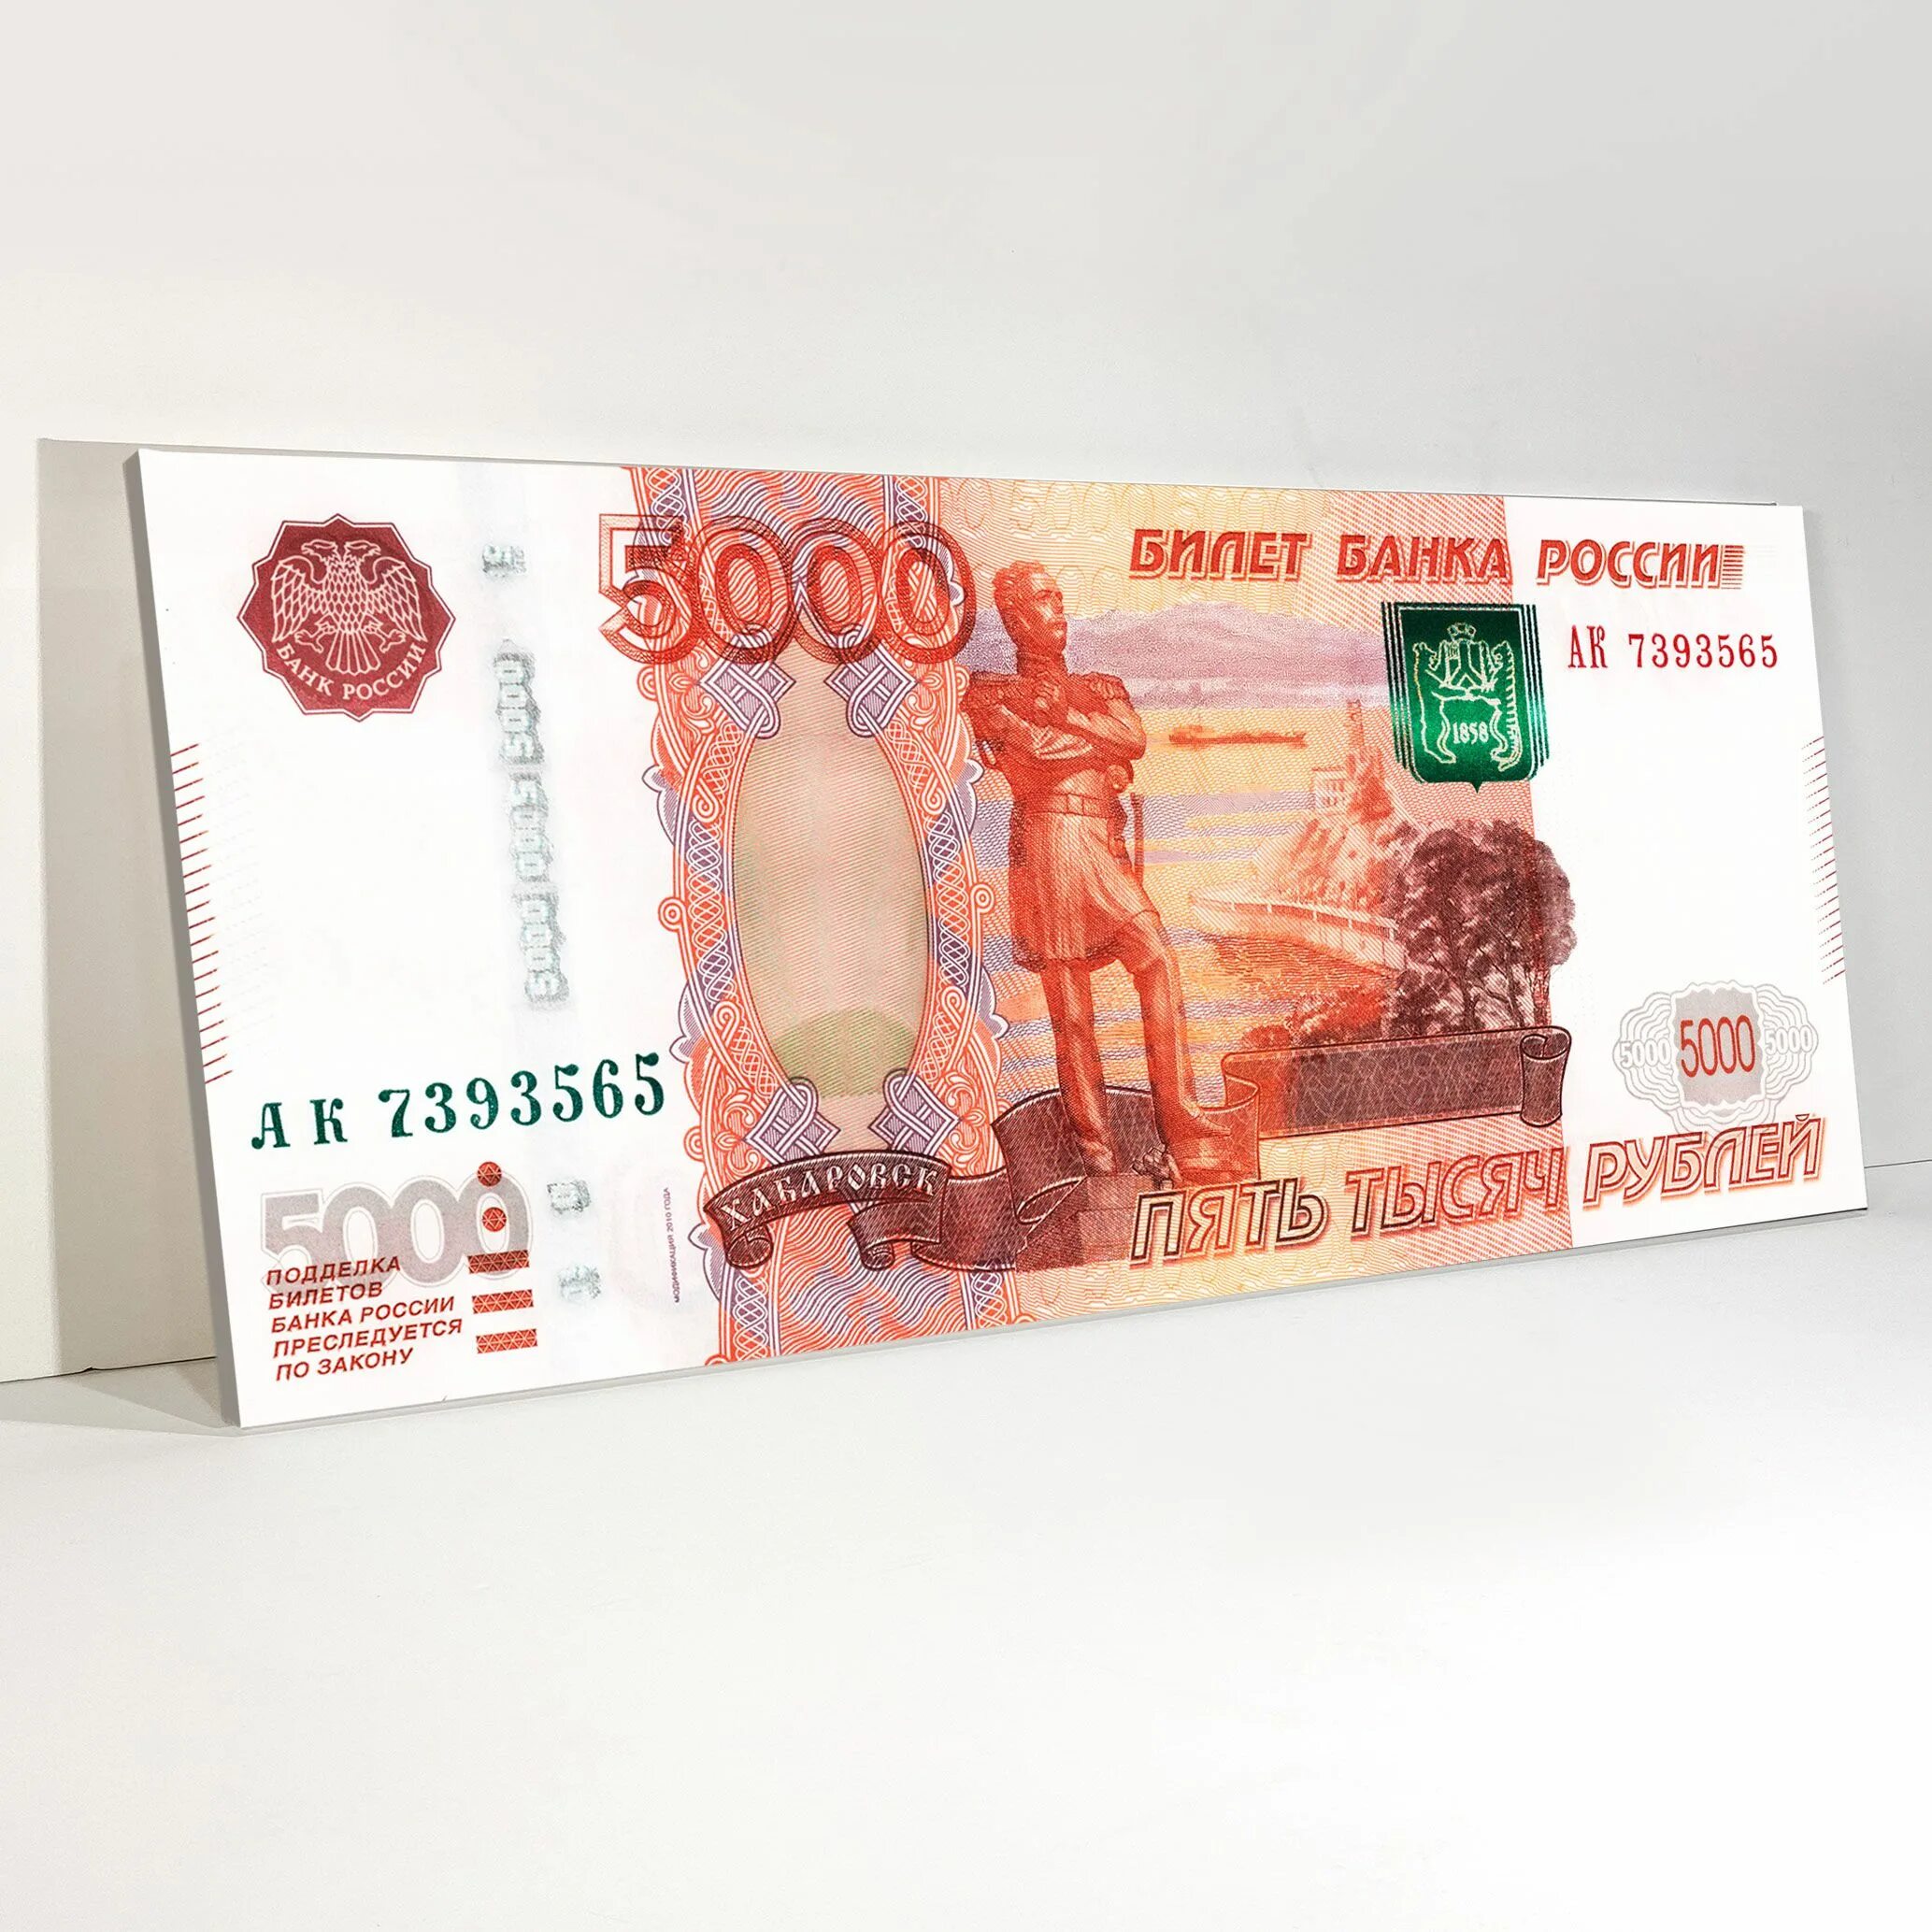 5000 рублей оригинал